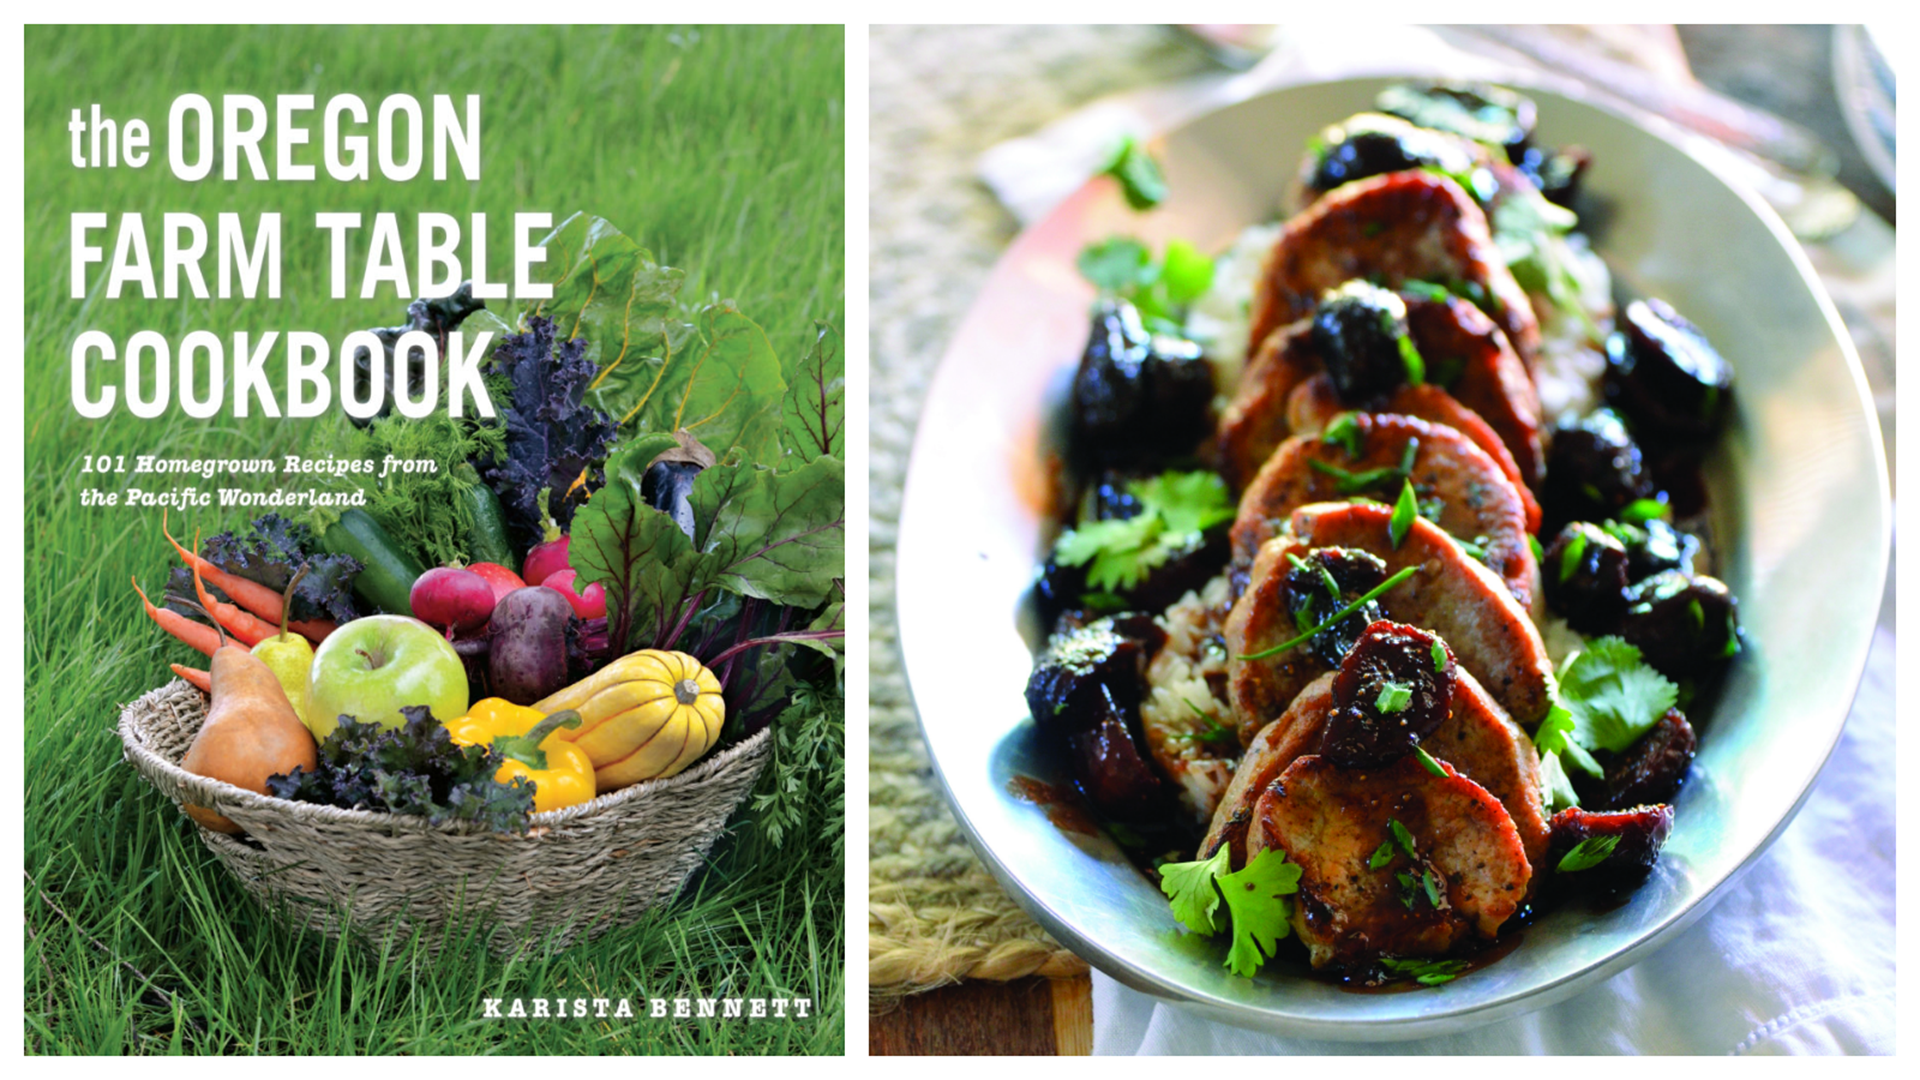 Oregon Farm Table Cookbook author Karista Bennett shares a delicious way to spice up pork tenderloin! #NewDayNW